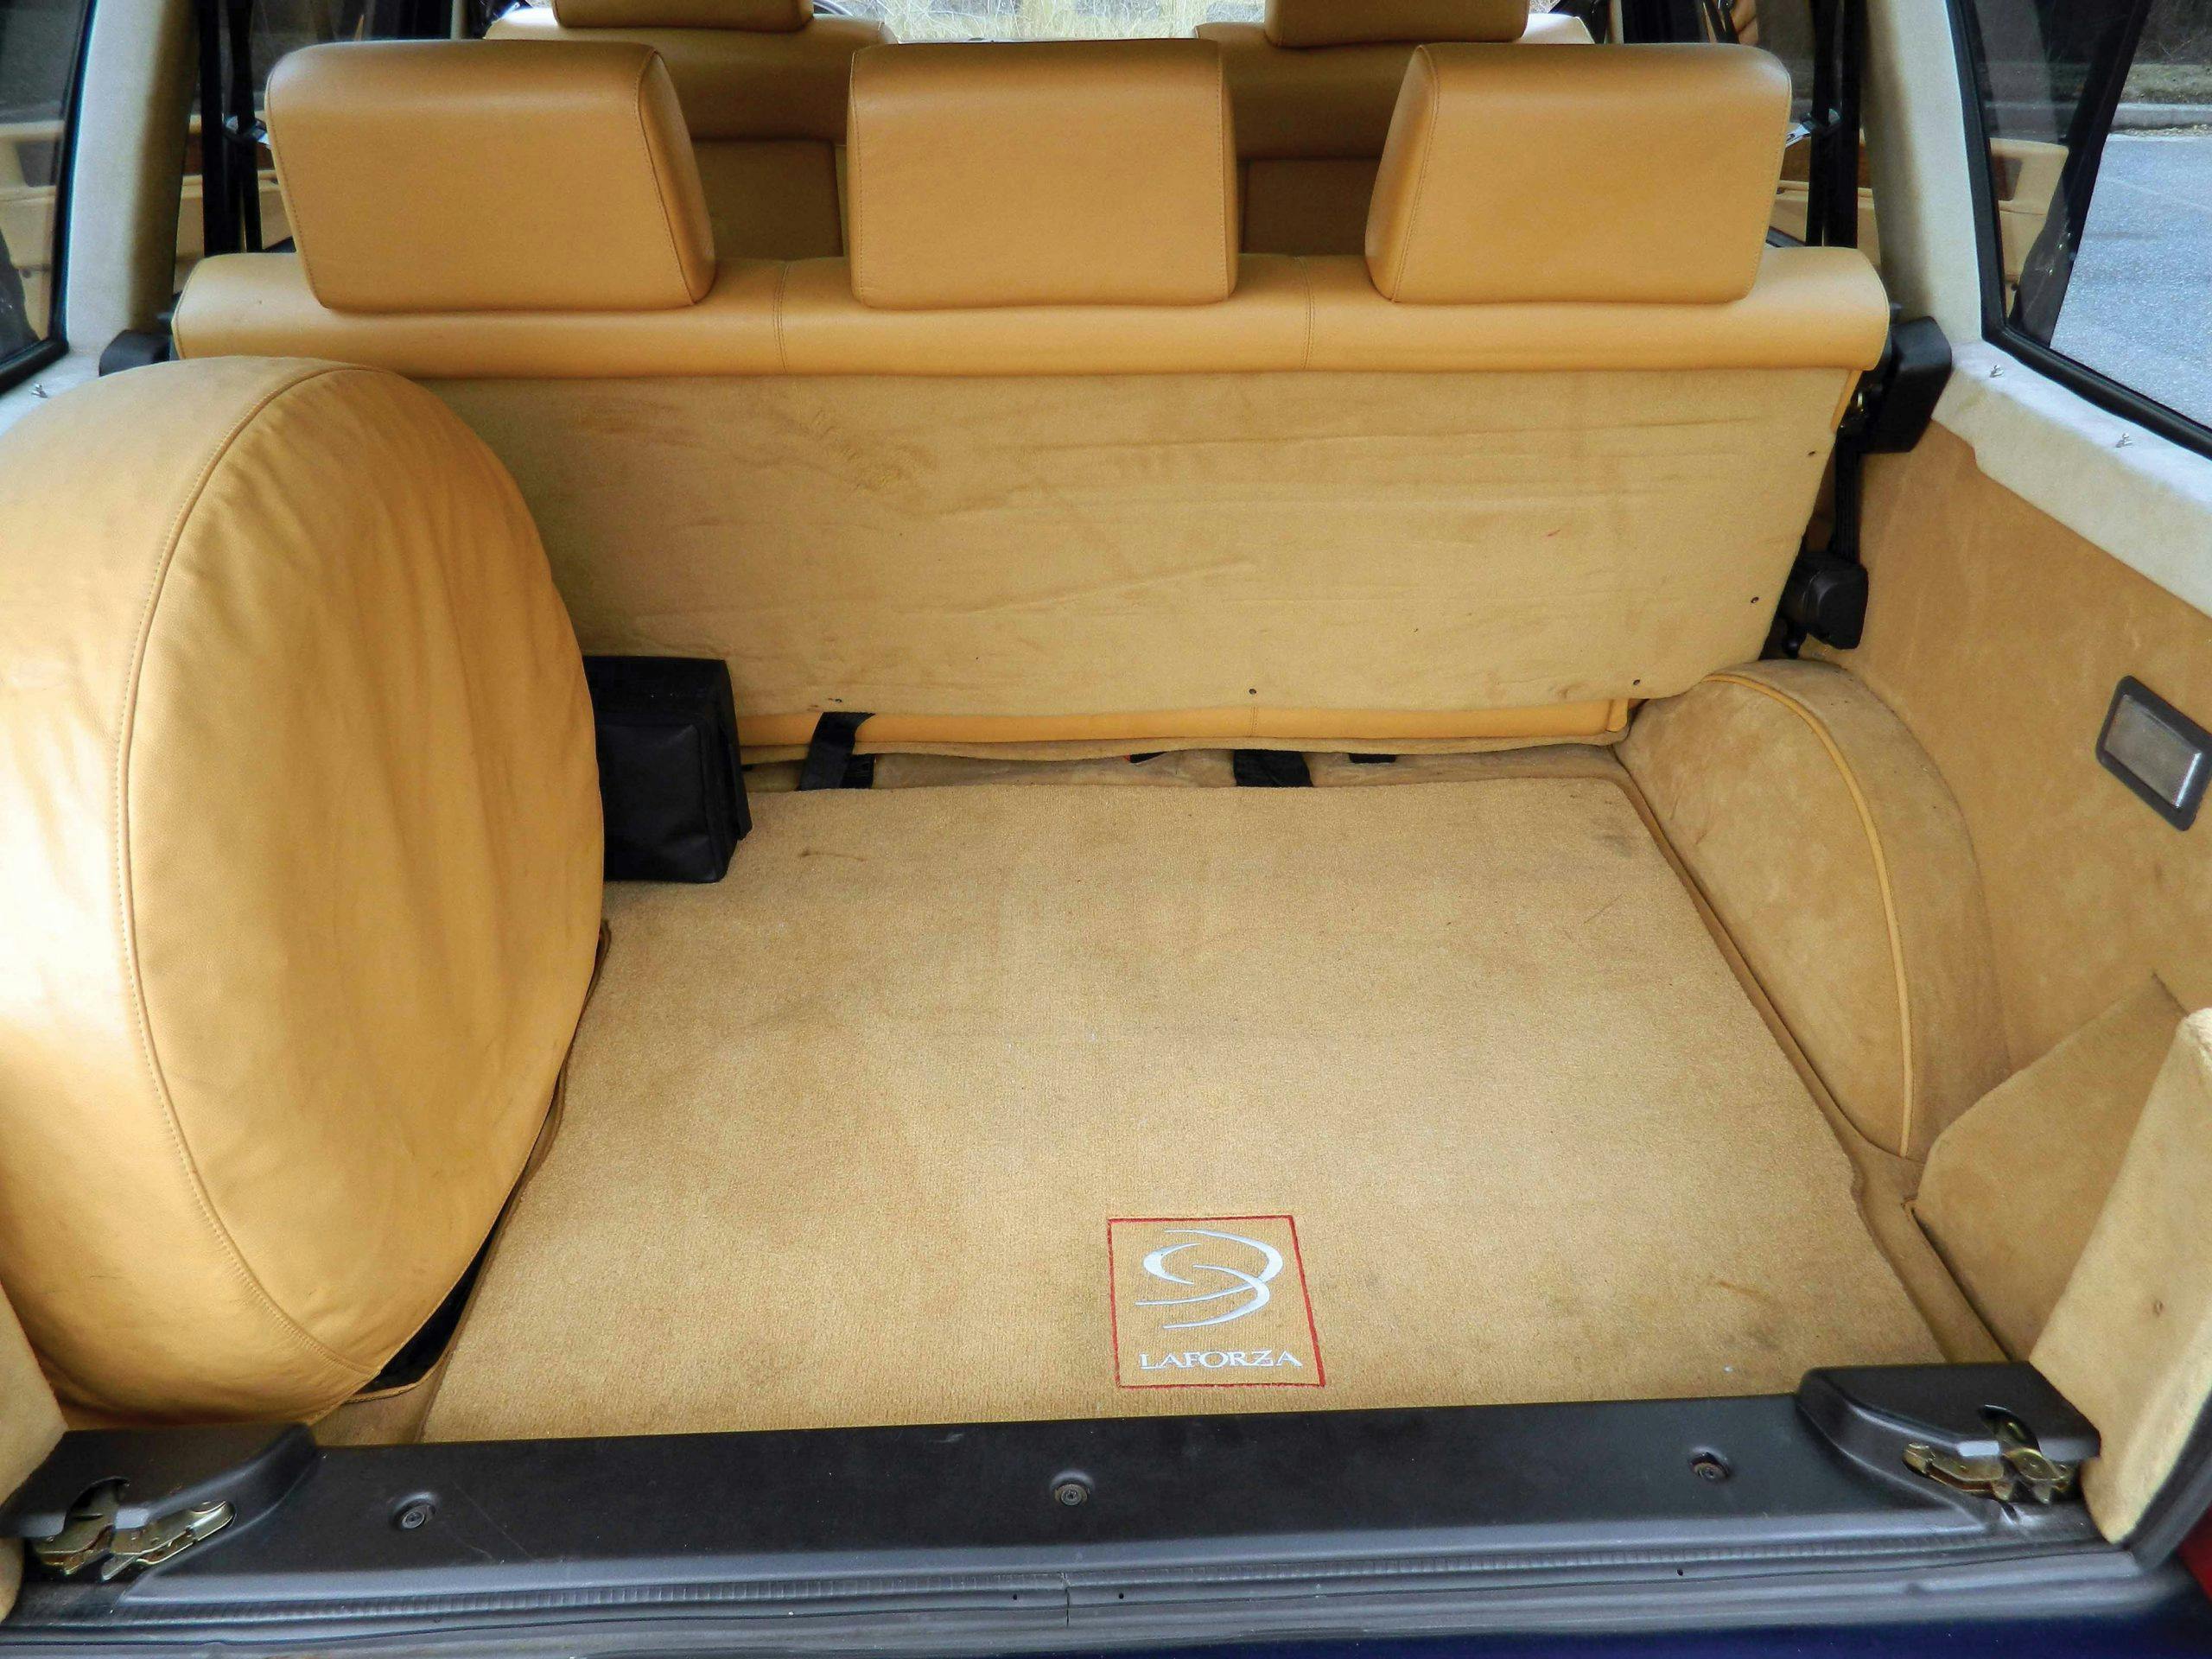 1998 Laforza Magnum interior rear cargo